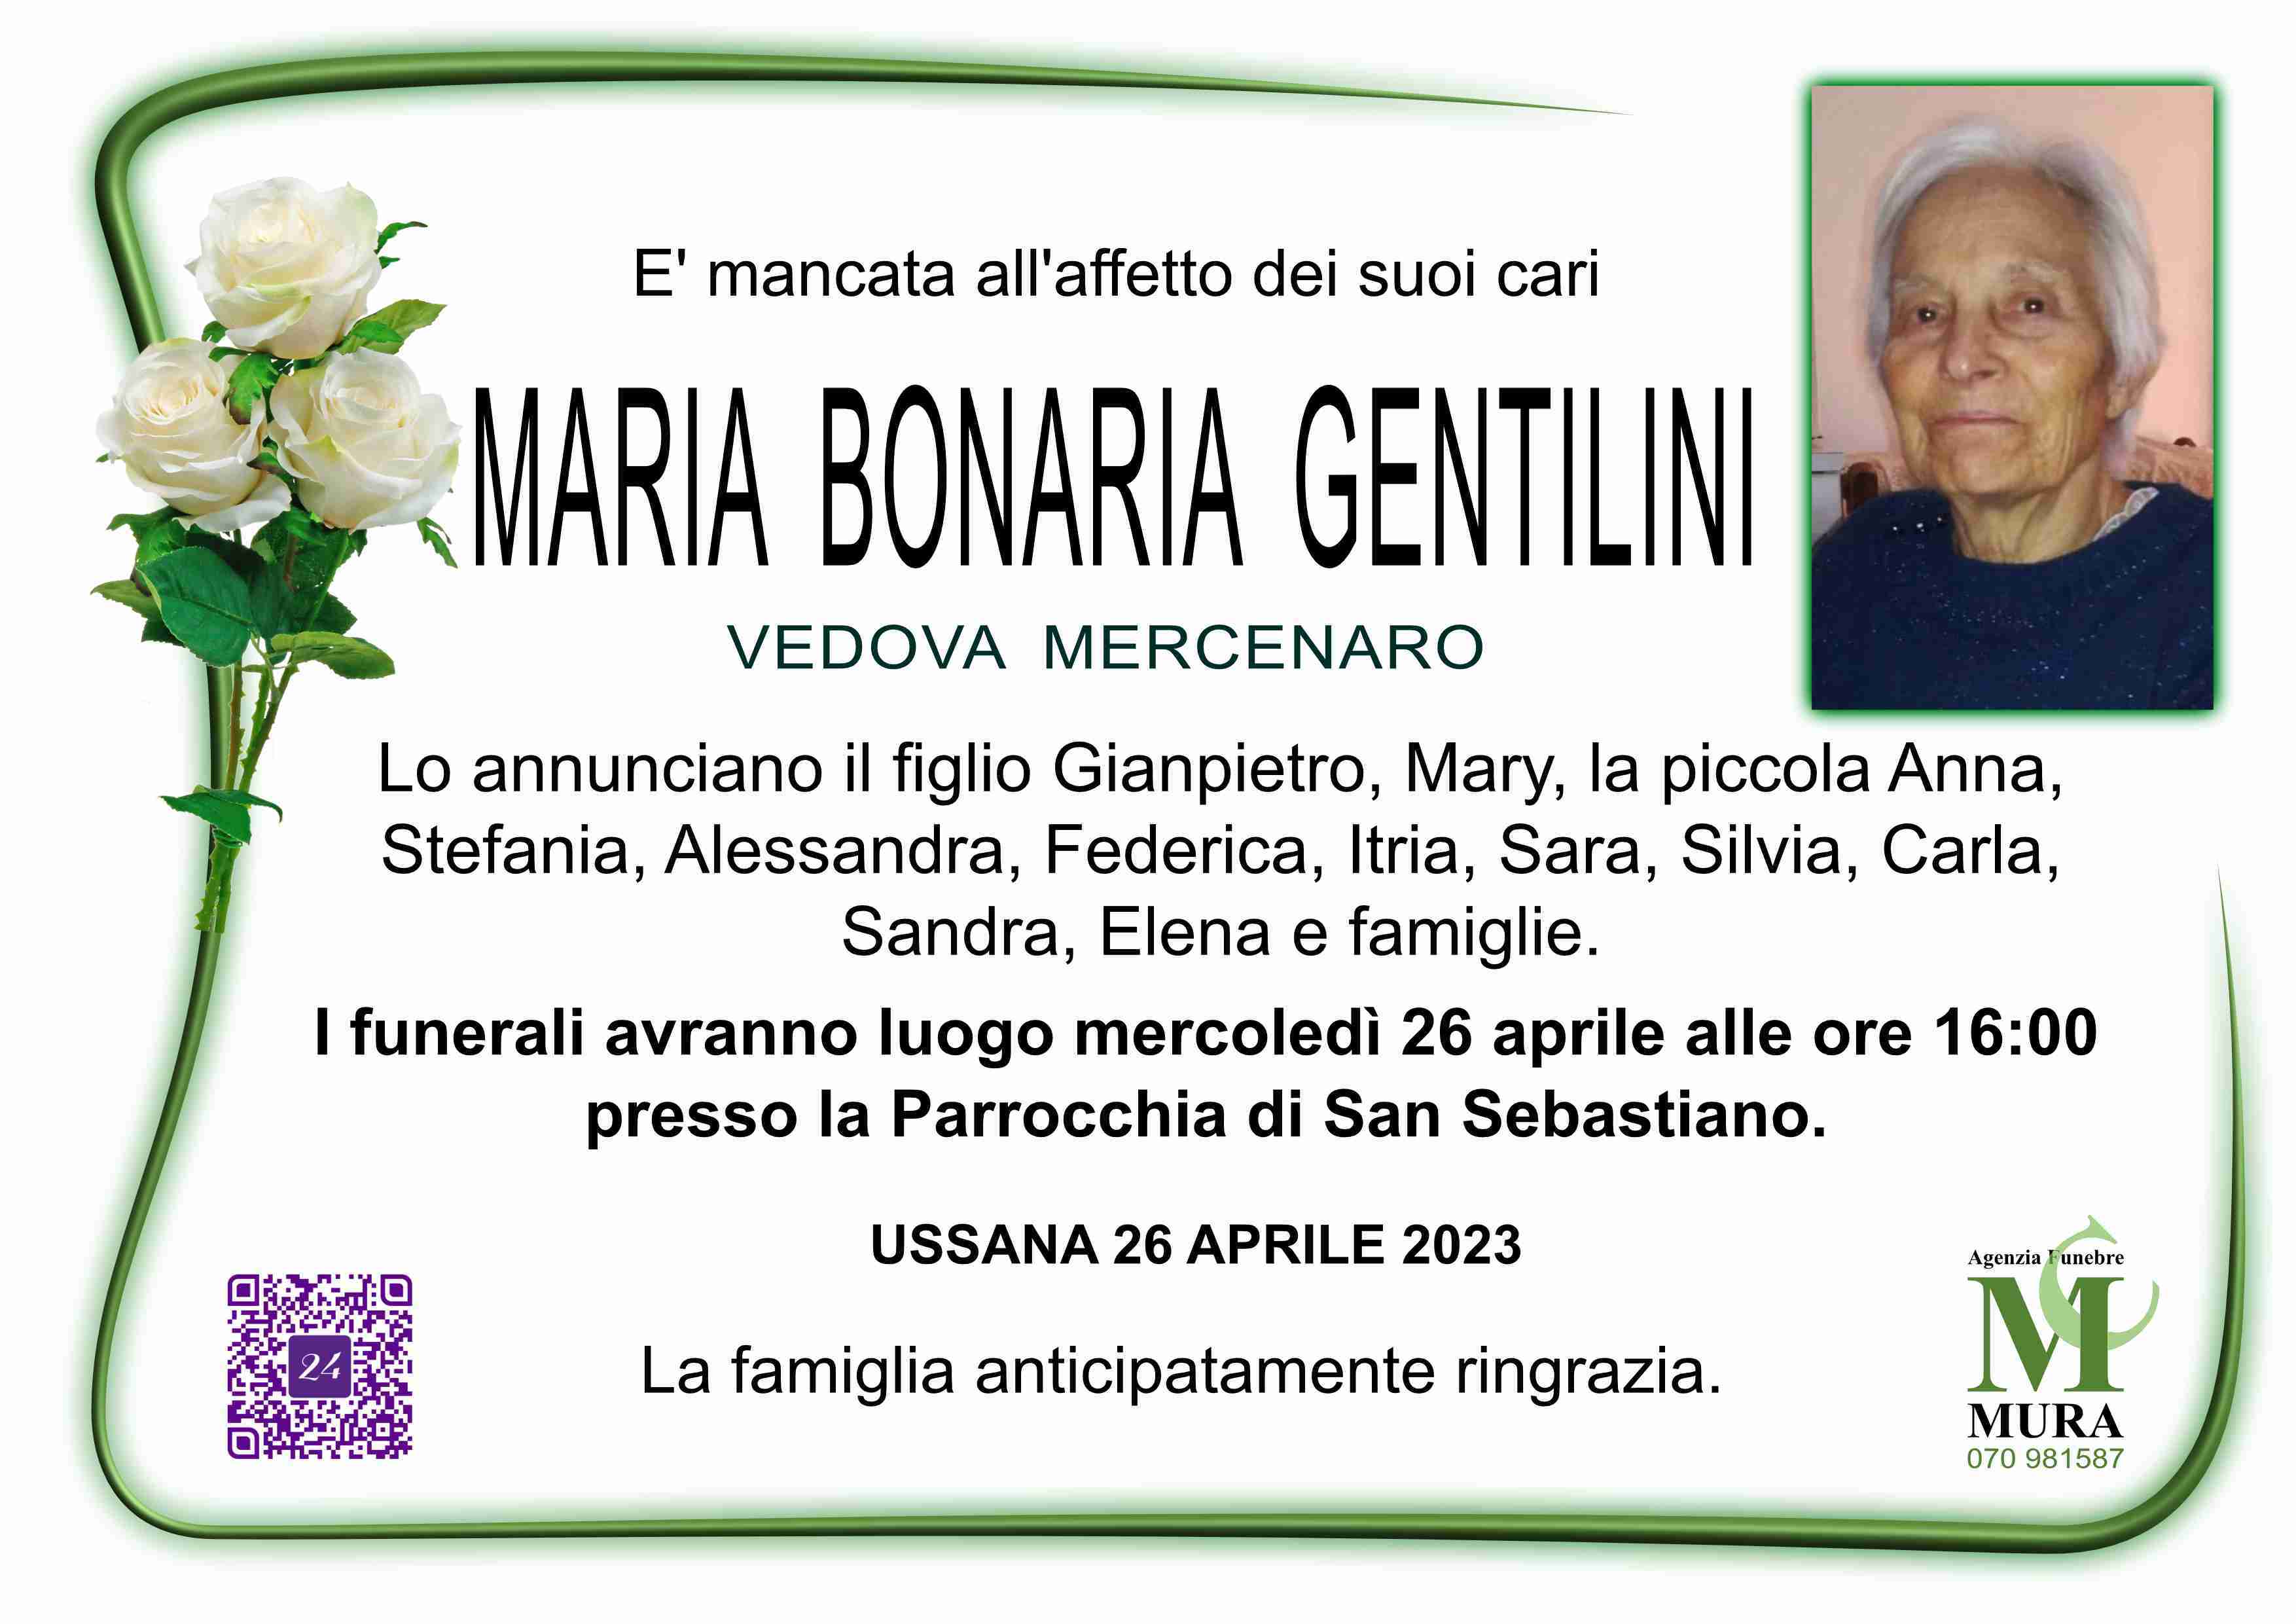 Maria Bonaria Gentilini